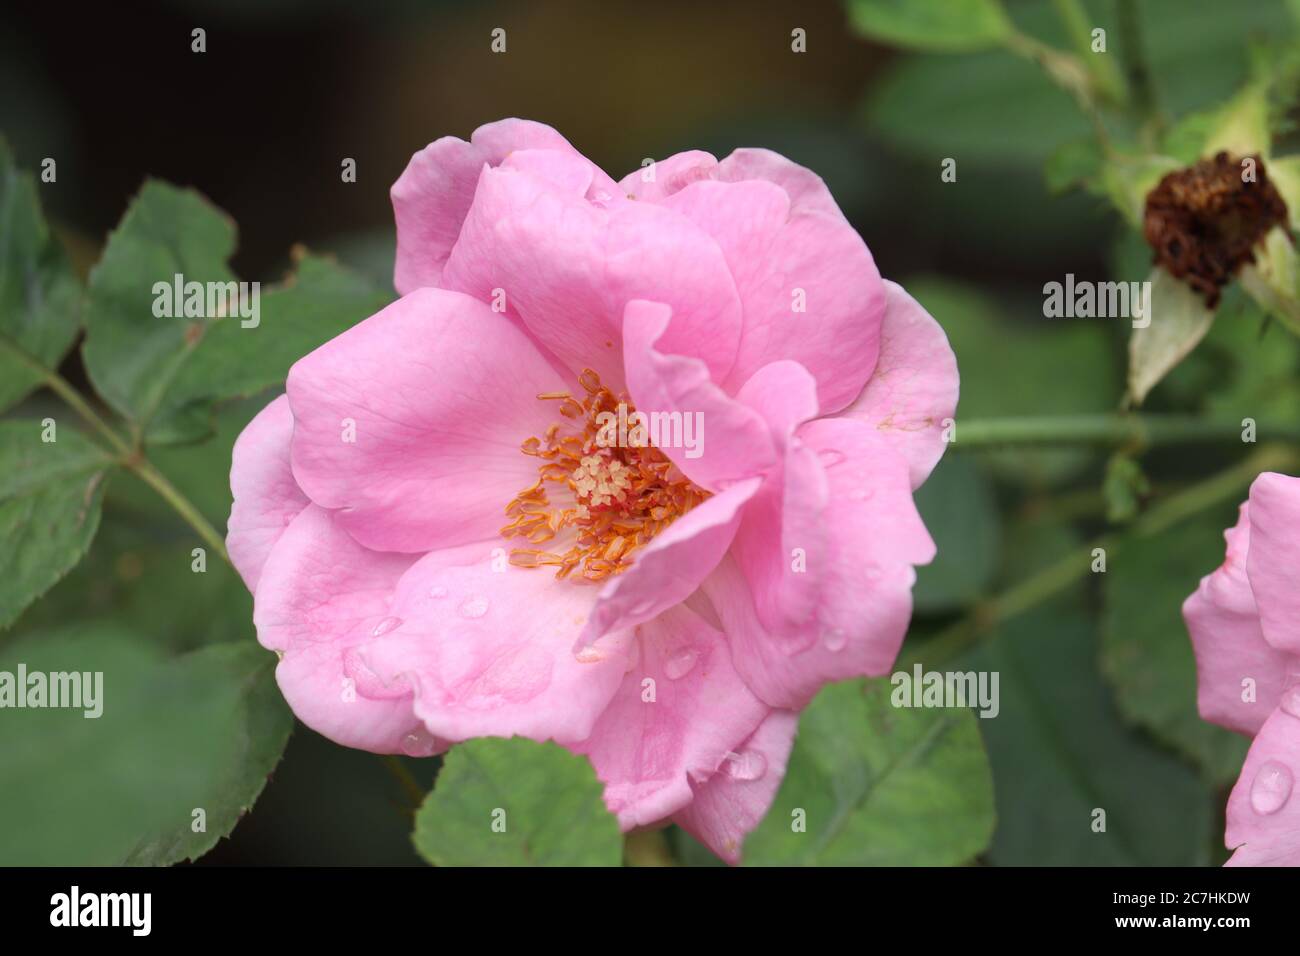 pink rose flower in a garden Stock Photo